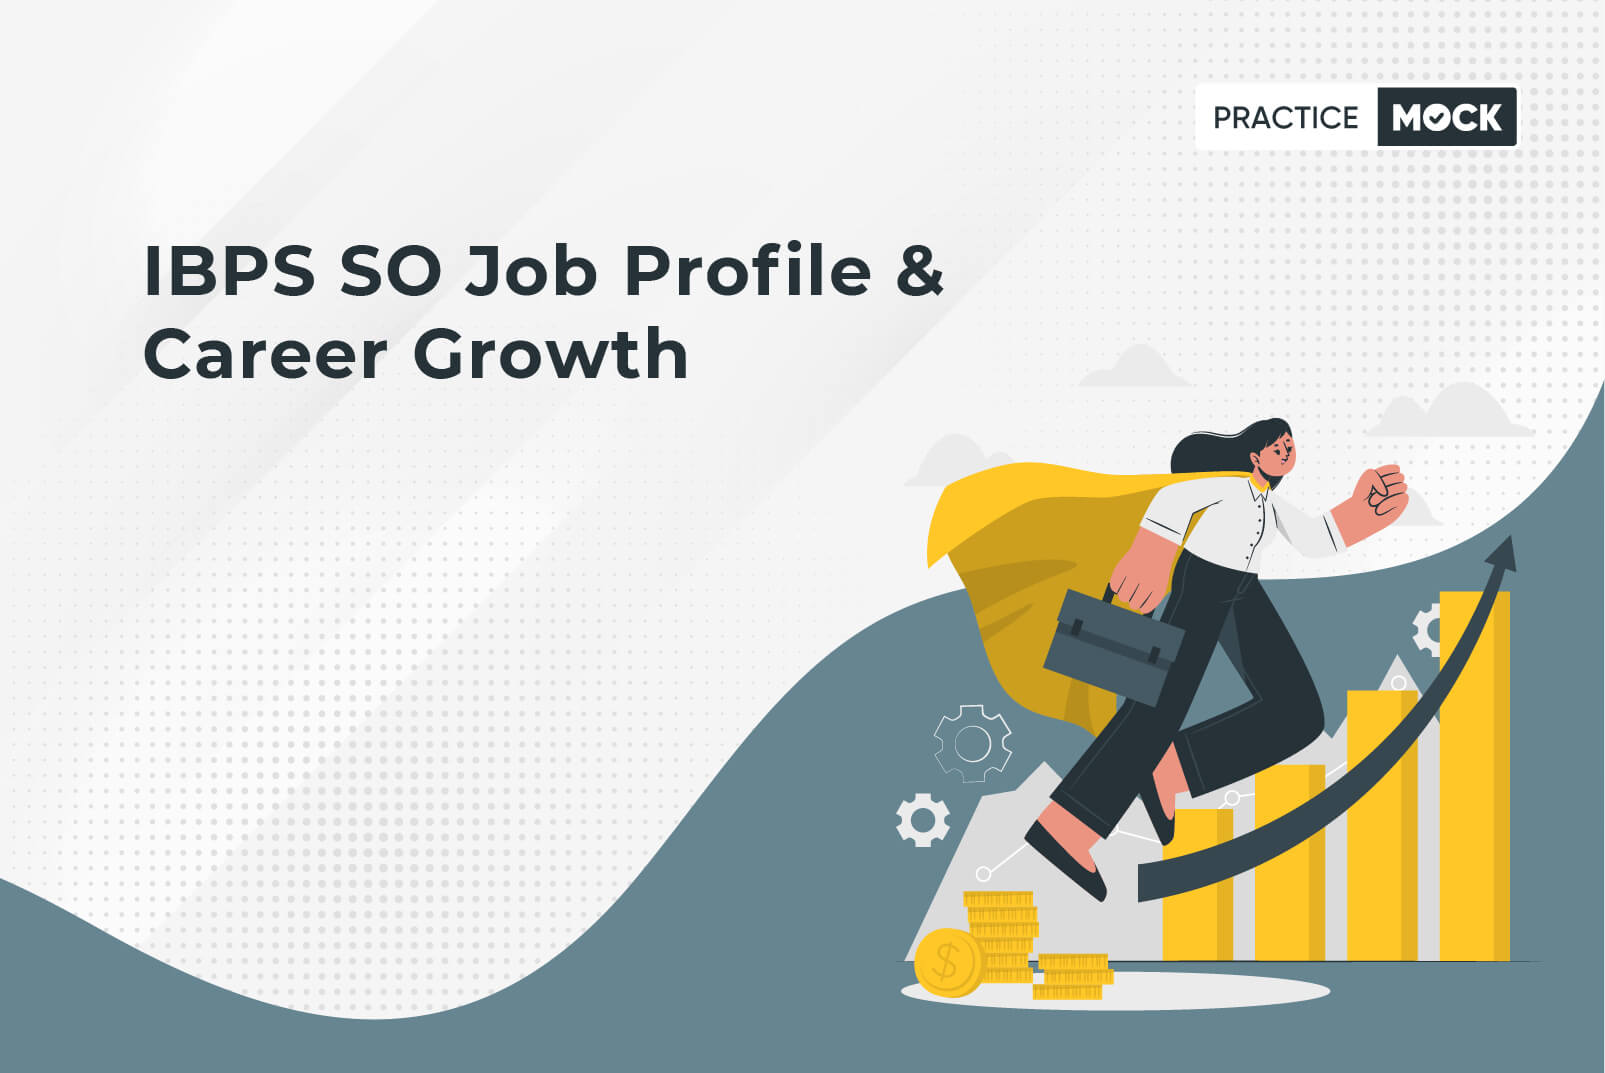 IBPS SO Job Profile & Career Growth